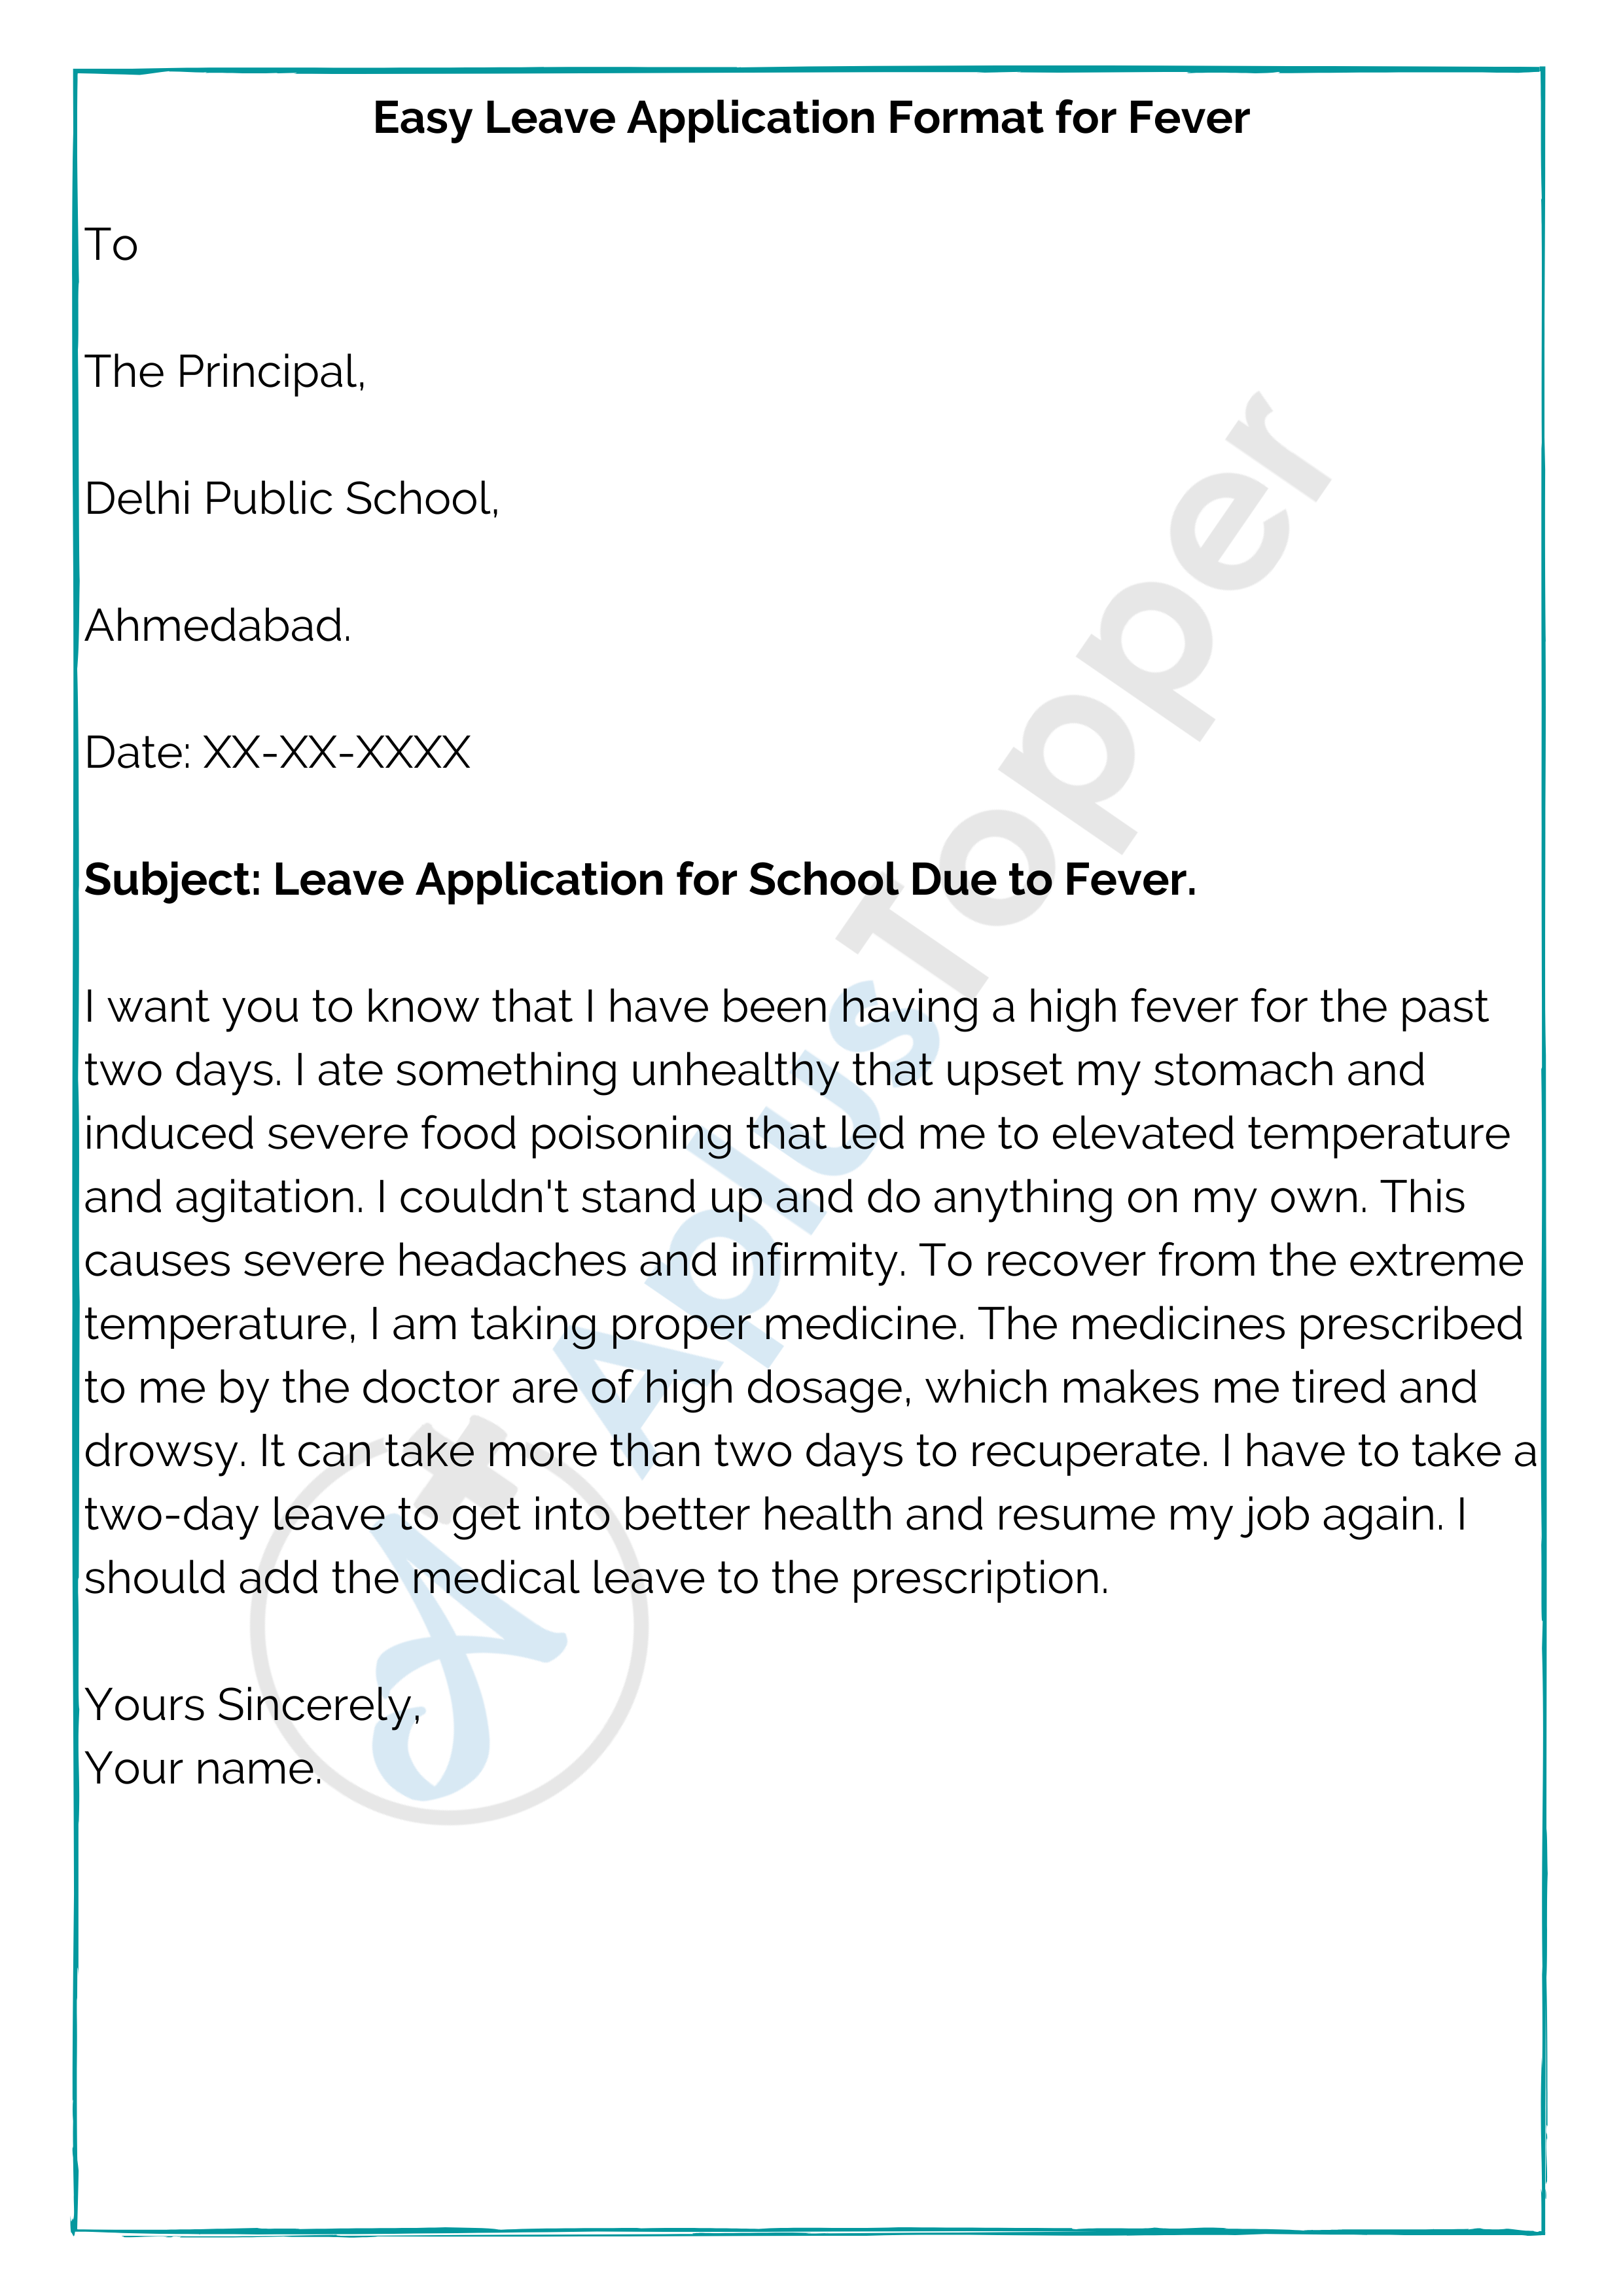 Easy Leave Application Format for Fever